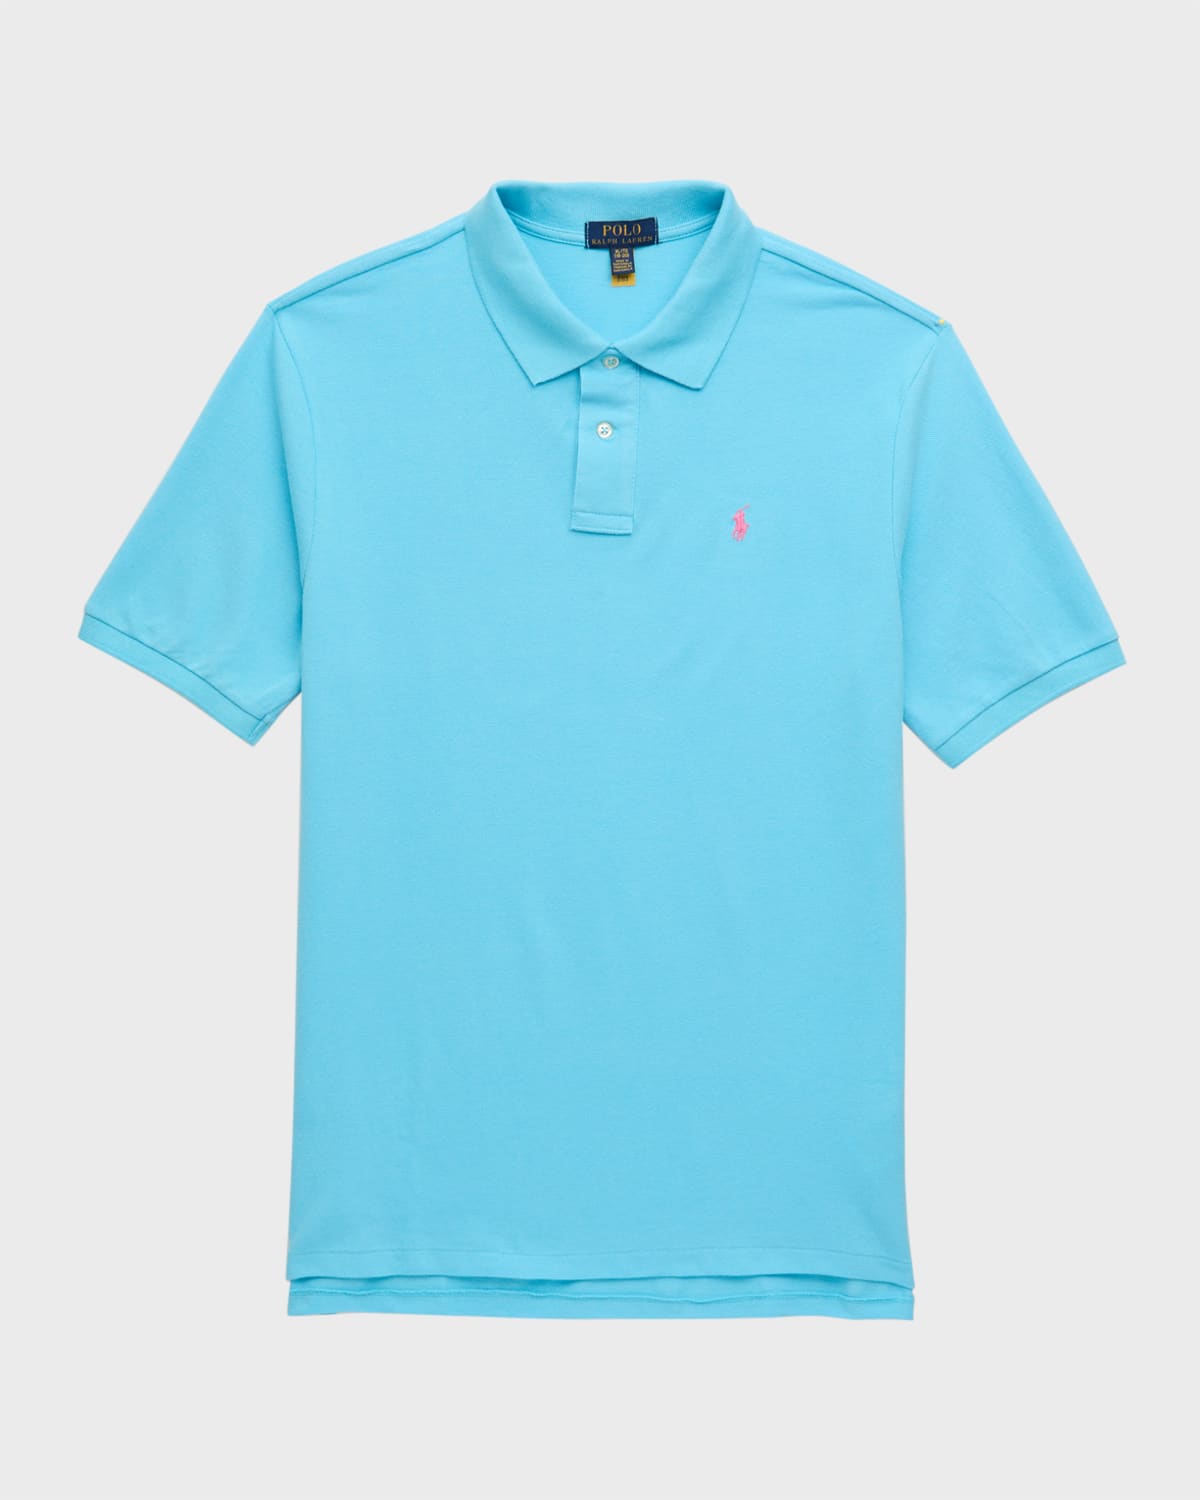 Boy's Classic Polo Shirt, Size S-XL